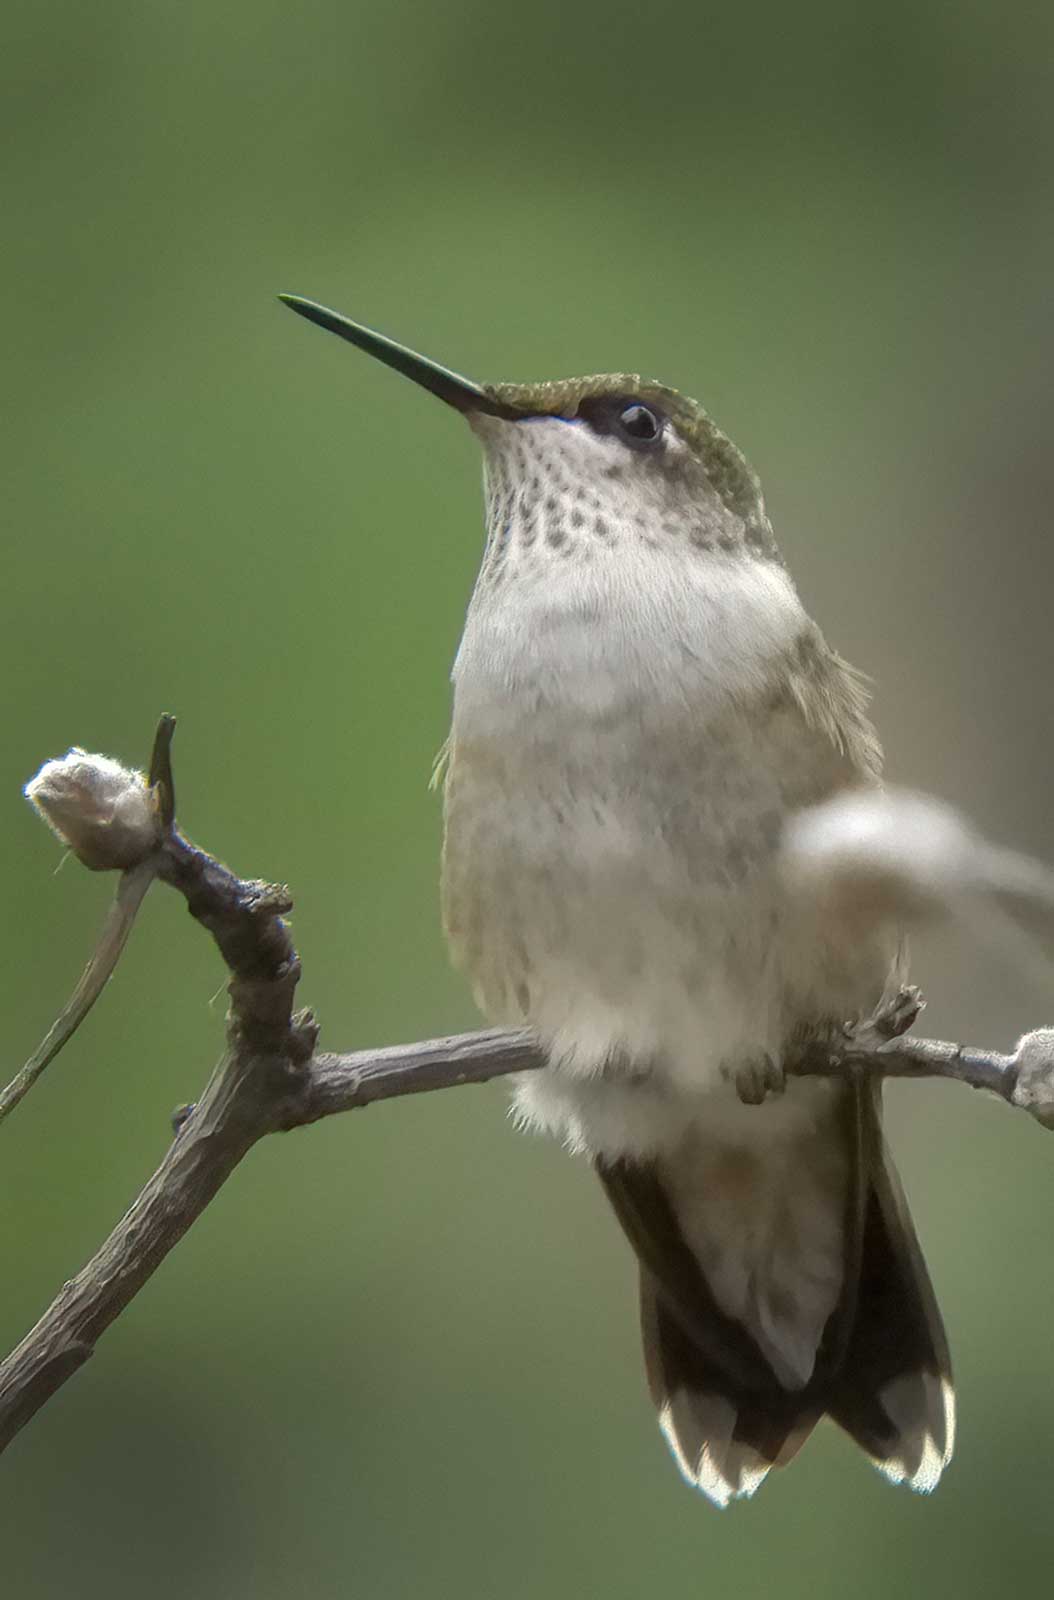 hummingbird10